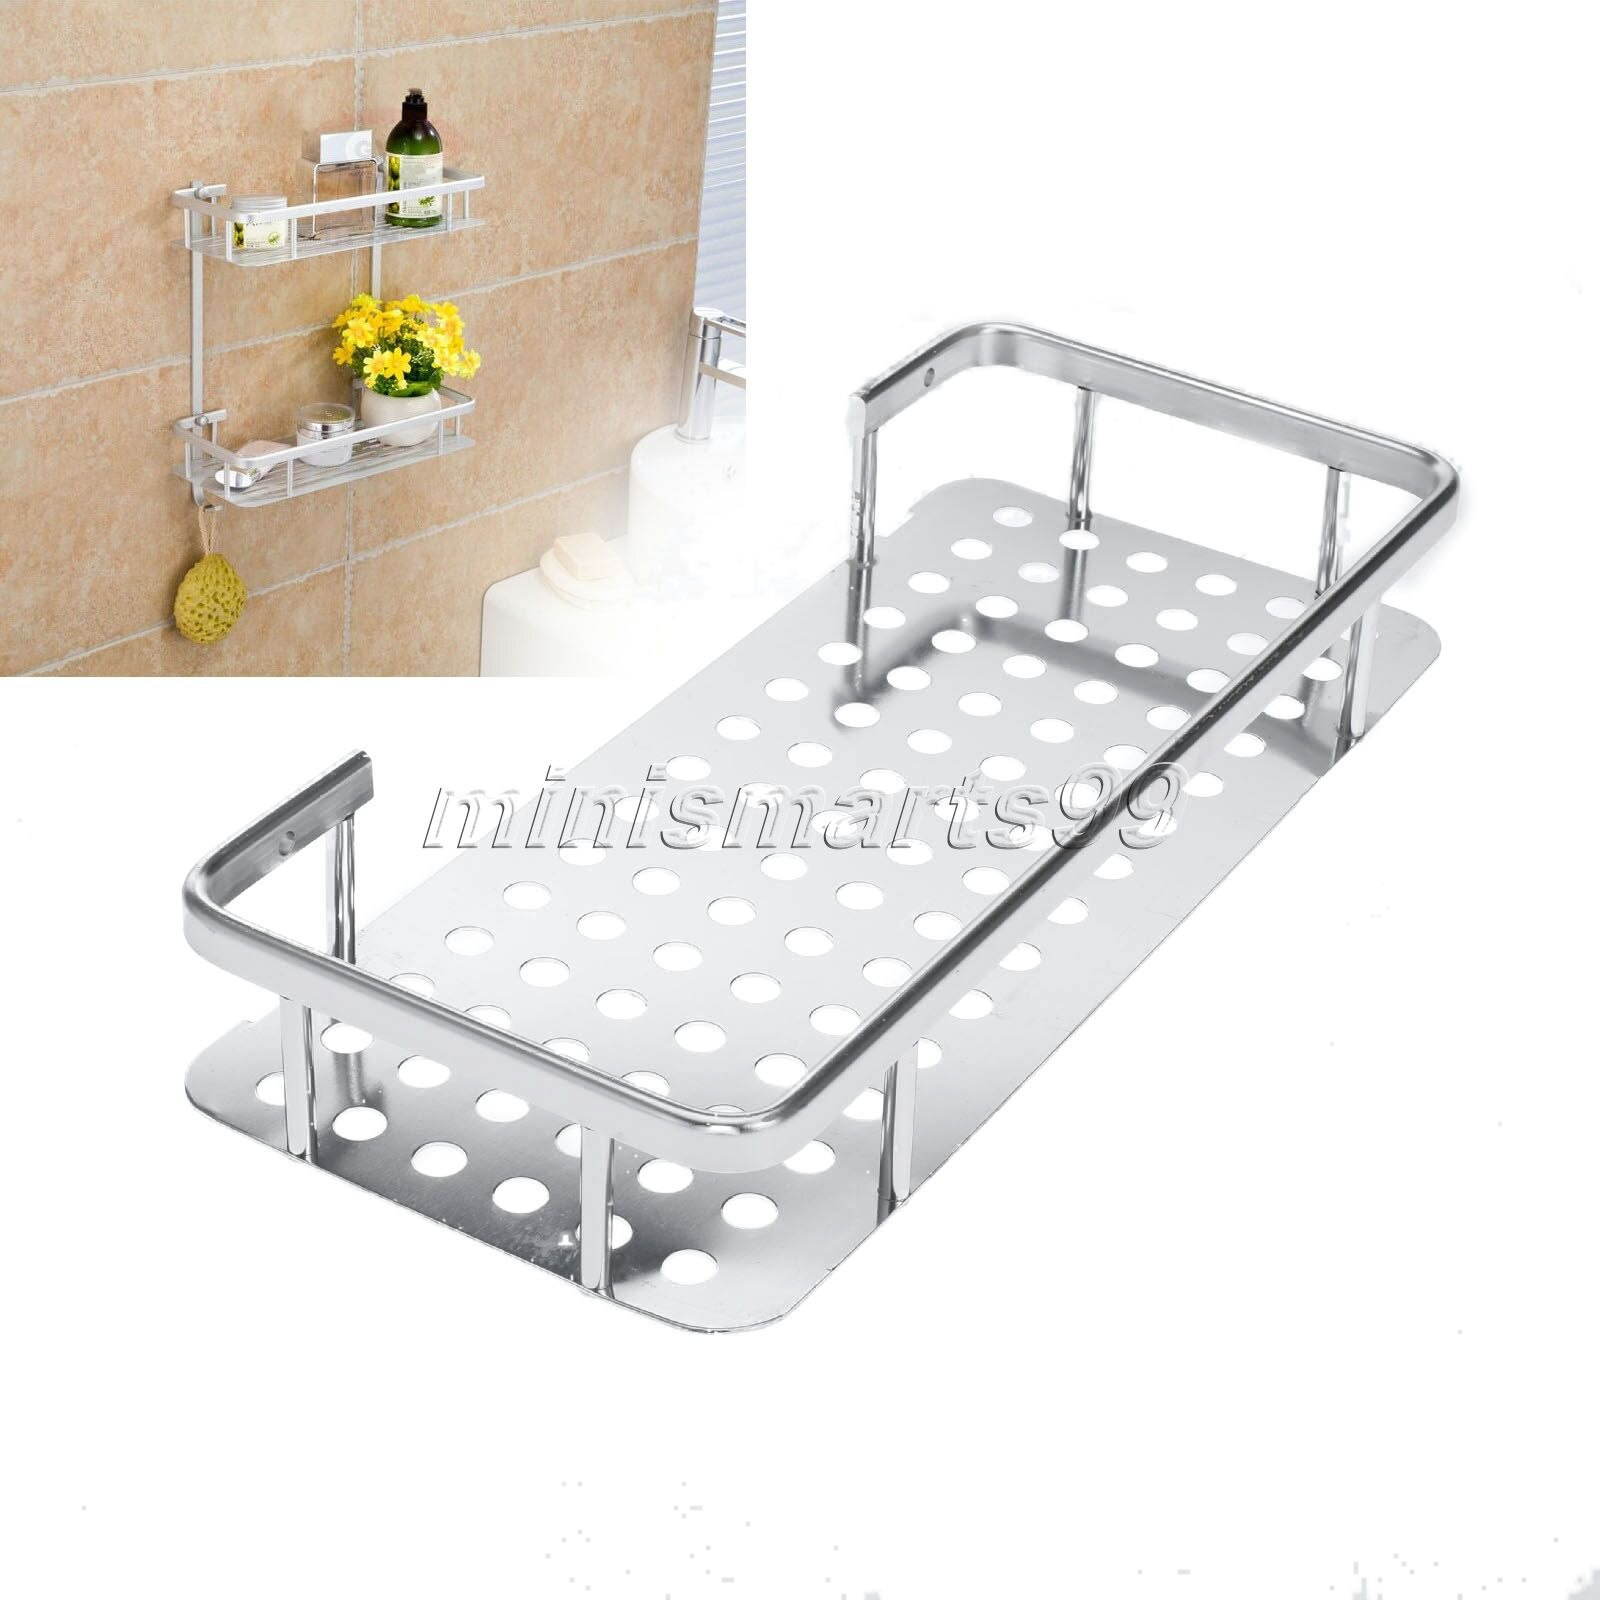 Bathroom Wall Cabinet With Baskets
 Aliexpress Buy Space Aluminum Bathroom Shelf Bath